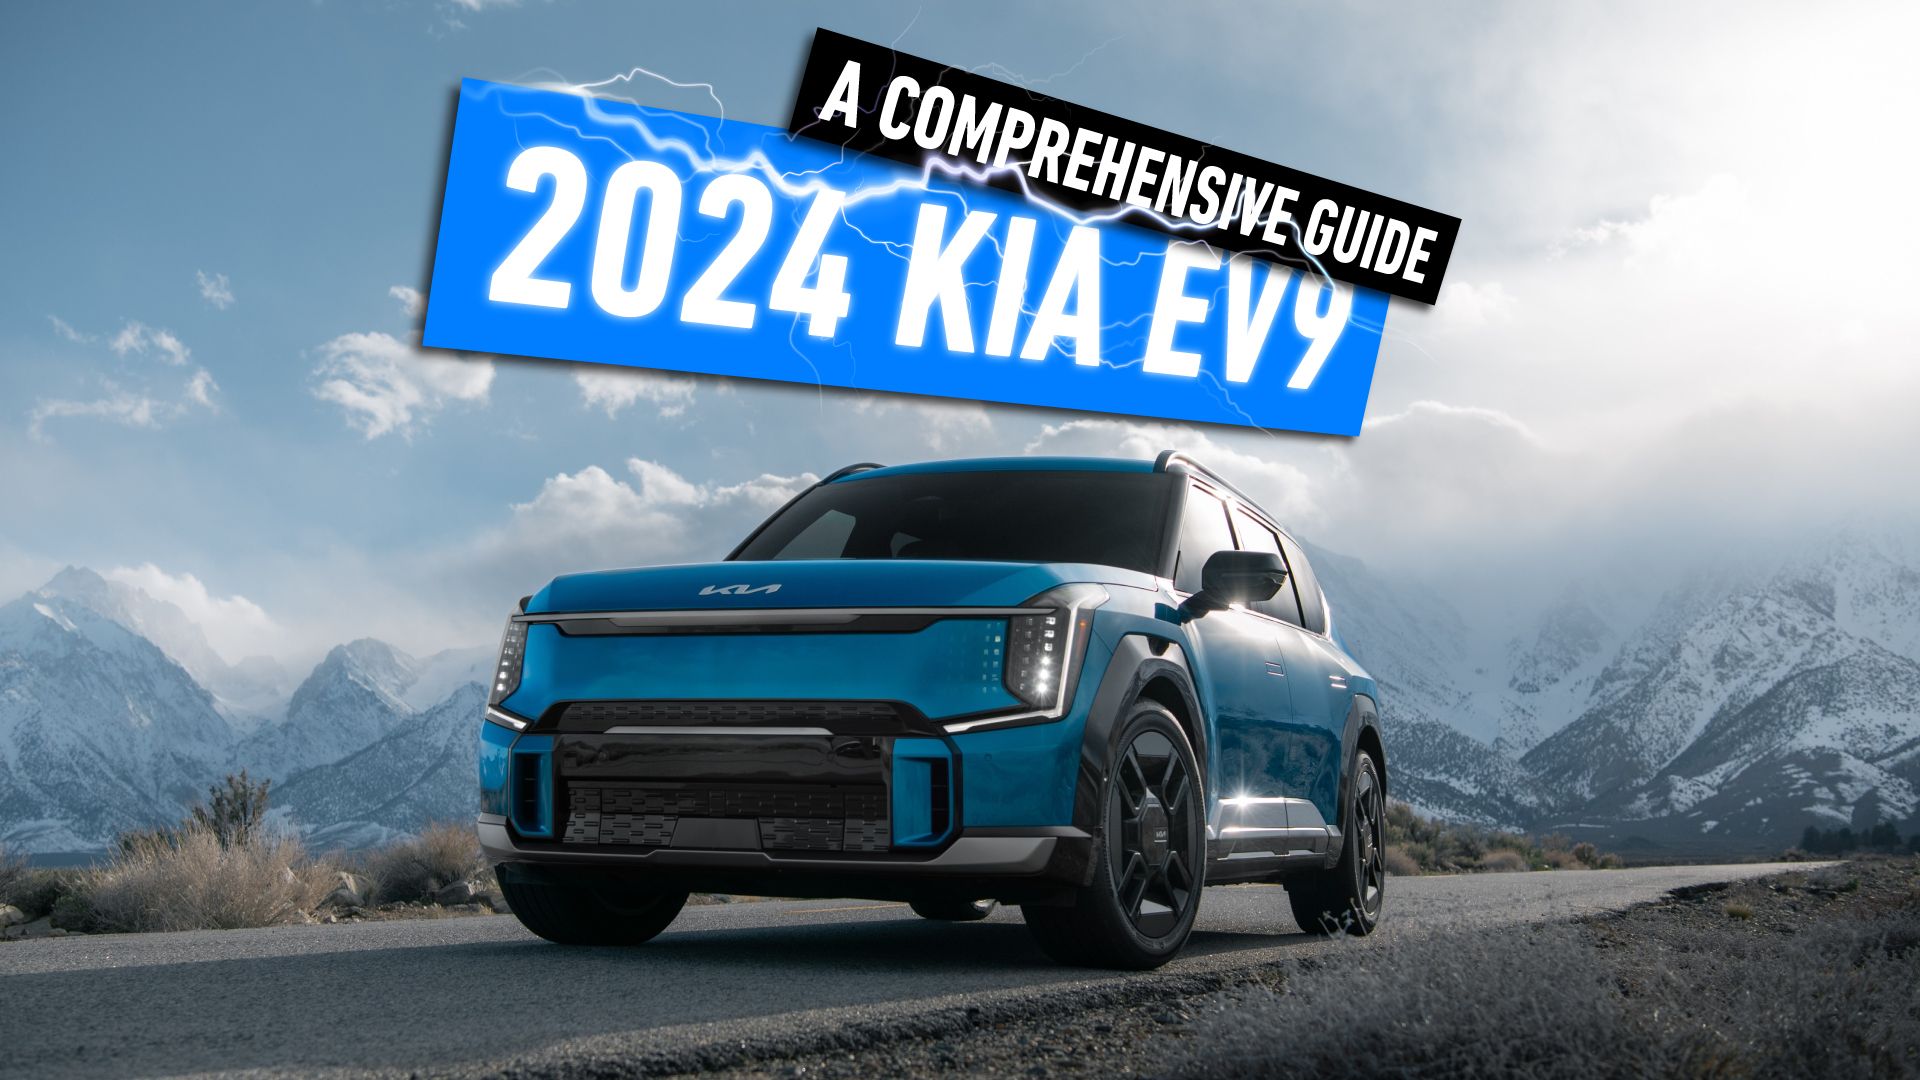 Custom image created for the 2024 Kia EV9 overview